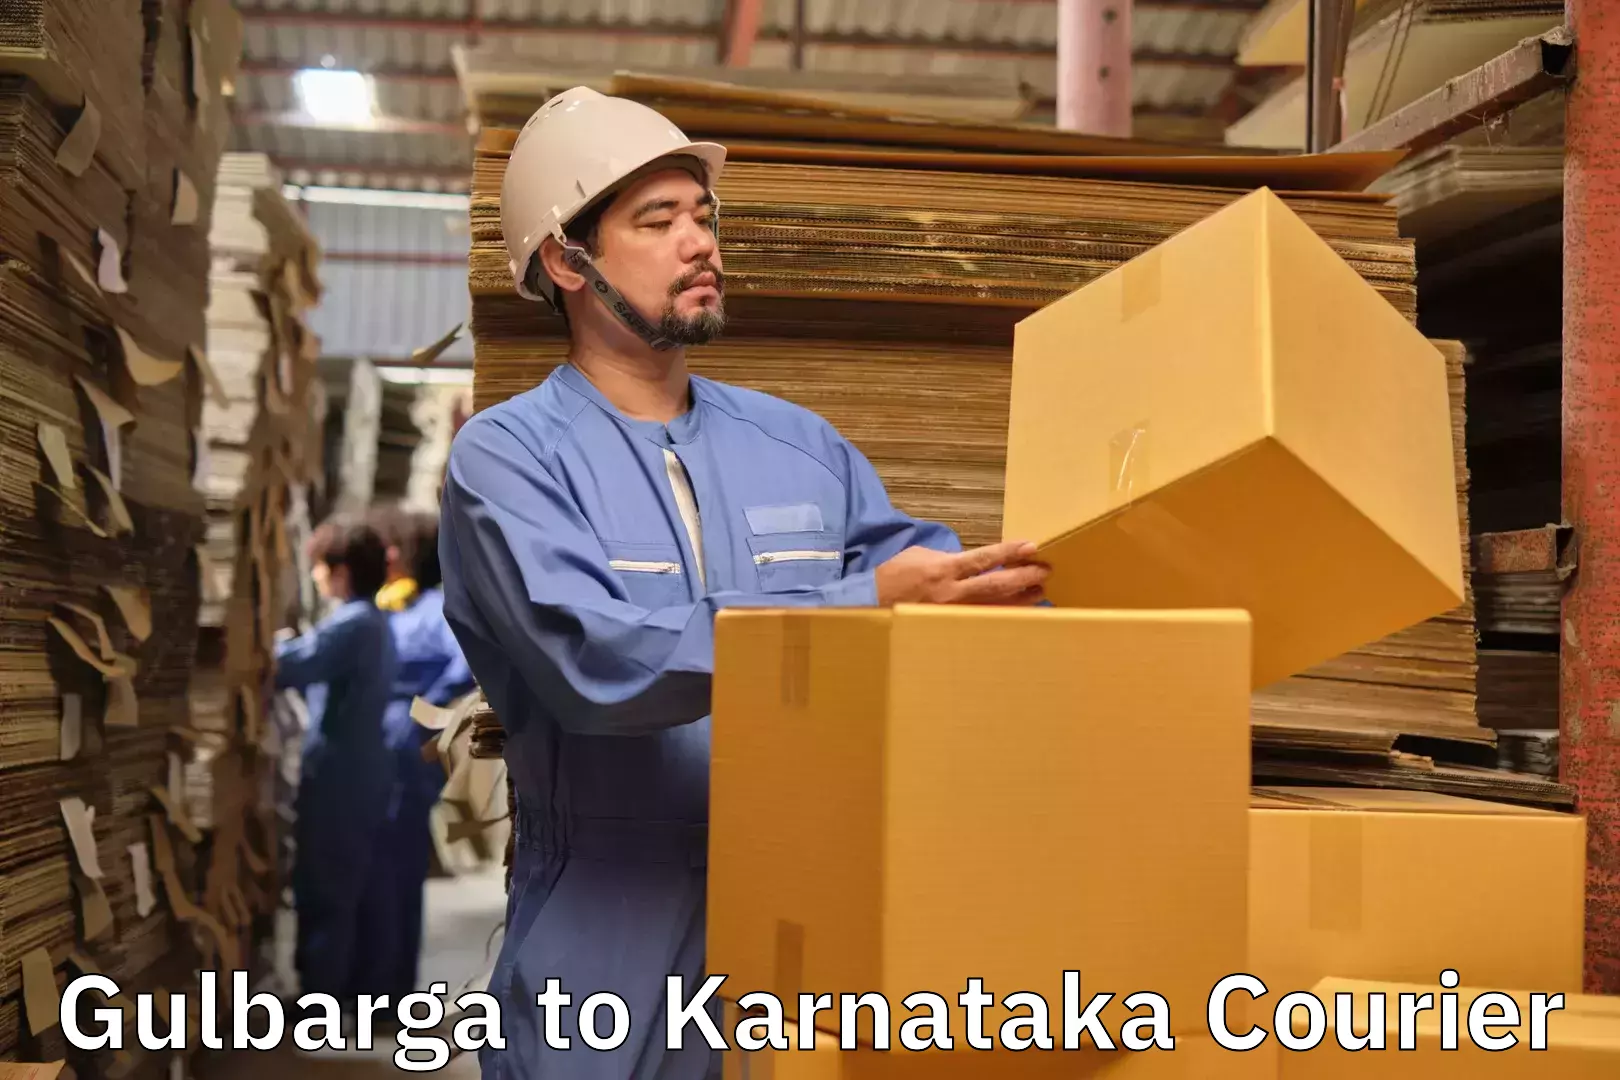 Luggage shipment specialists Gulbarga to Karnataka